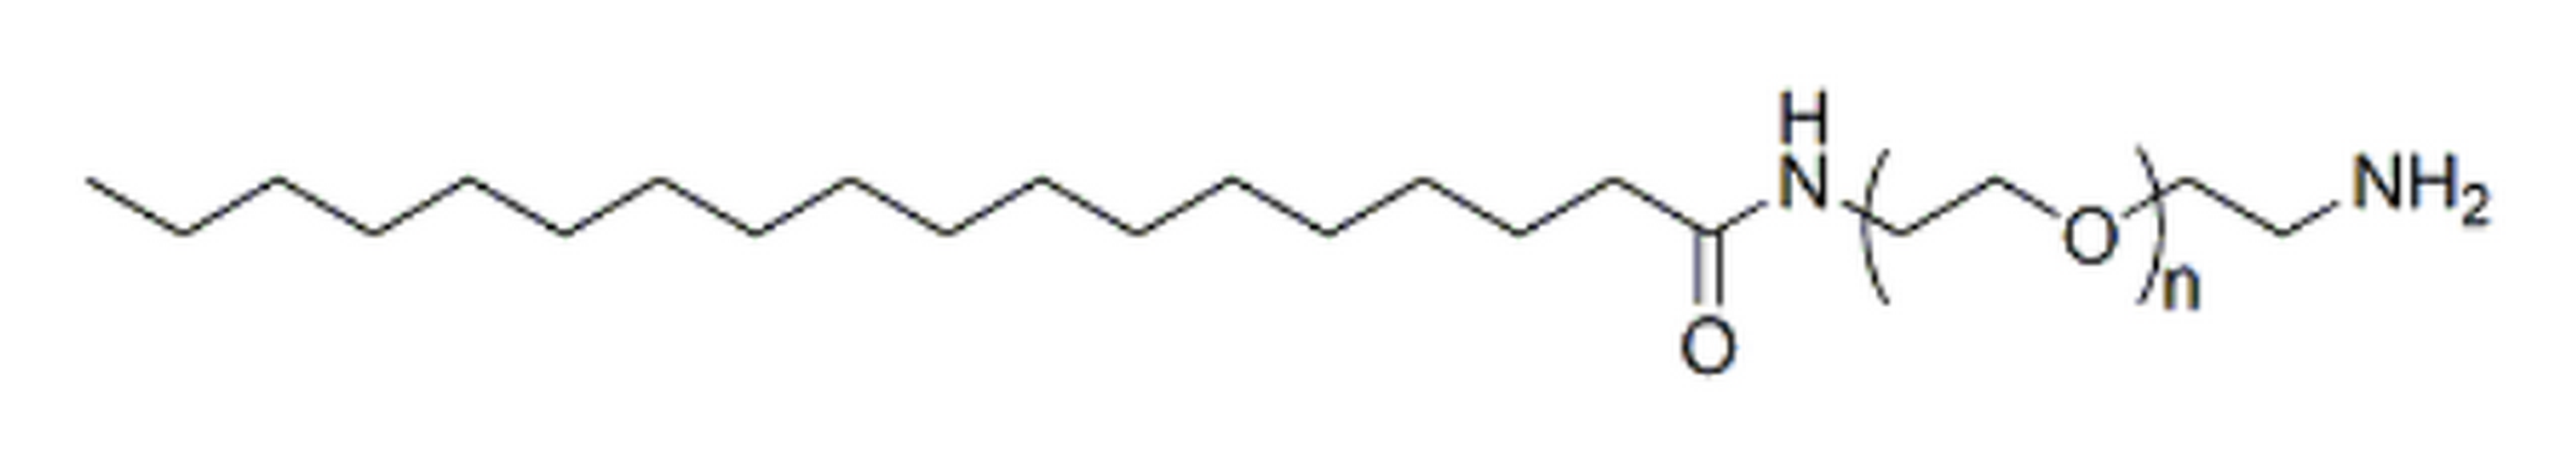 Stearic acid-PEG-amine, MW 10K